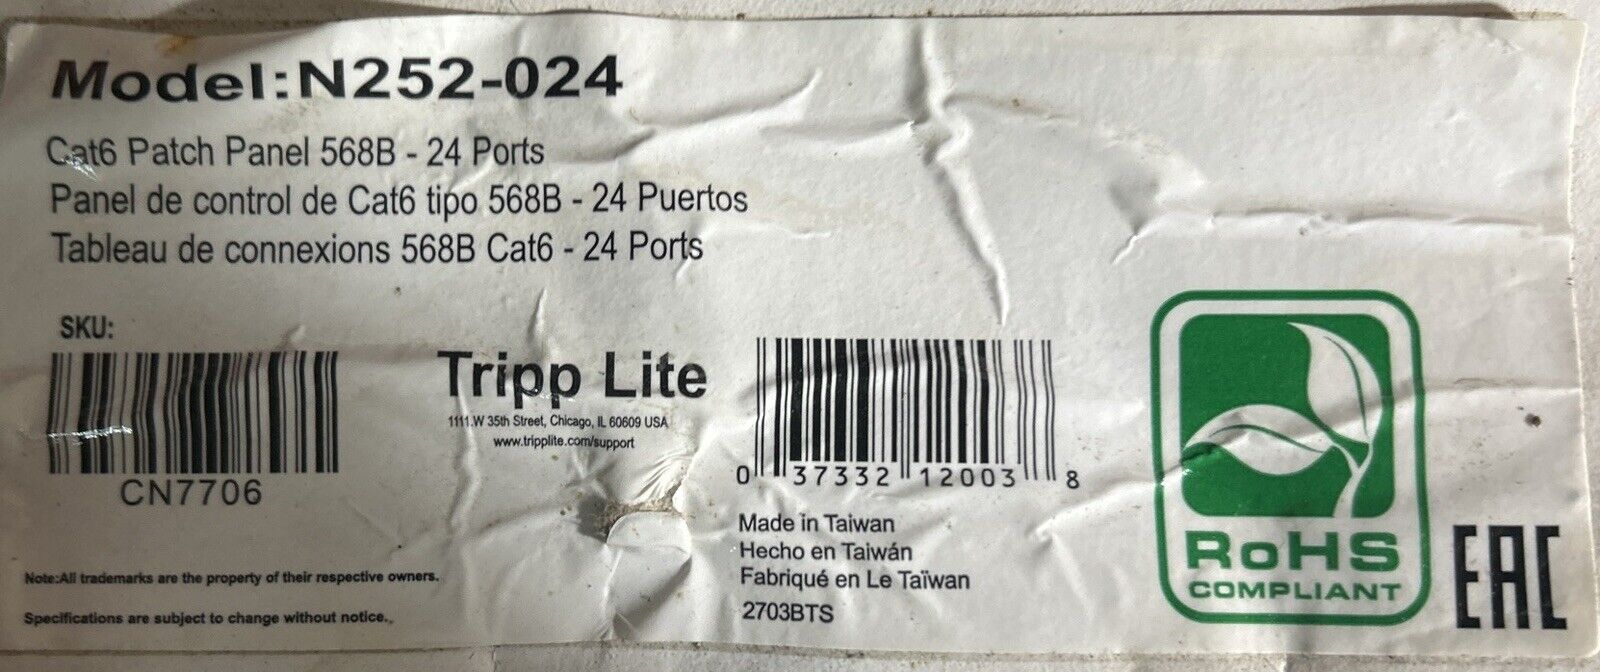 Tripp Lite 24-Port Cat6 Cat5 Patch Panel Feed Through 568A-B RJ45 1URM BRAND NEW